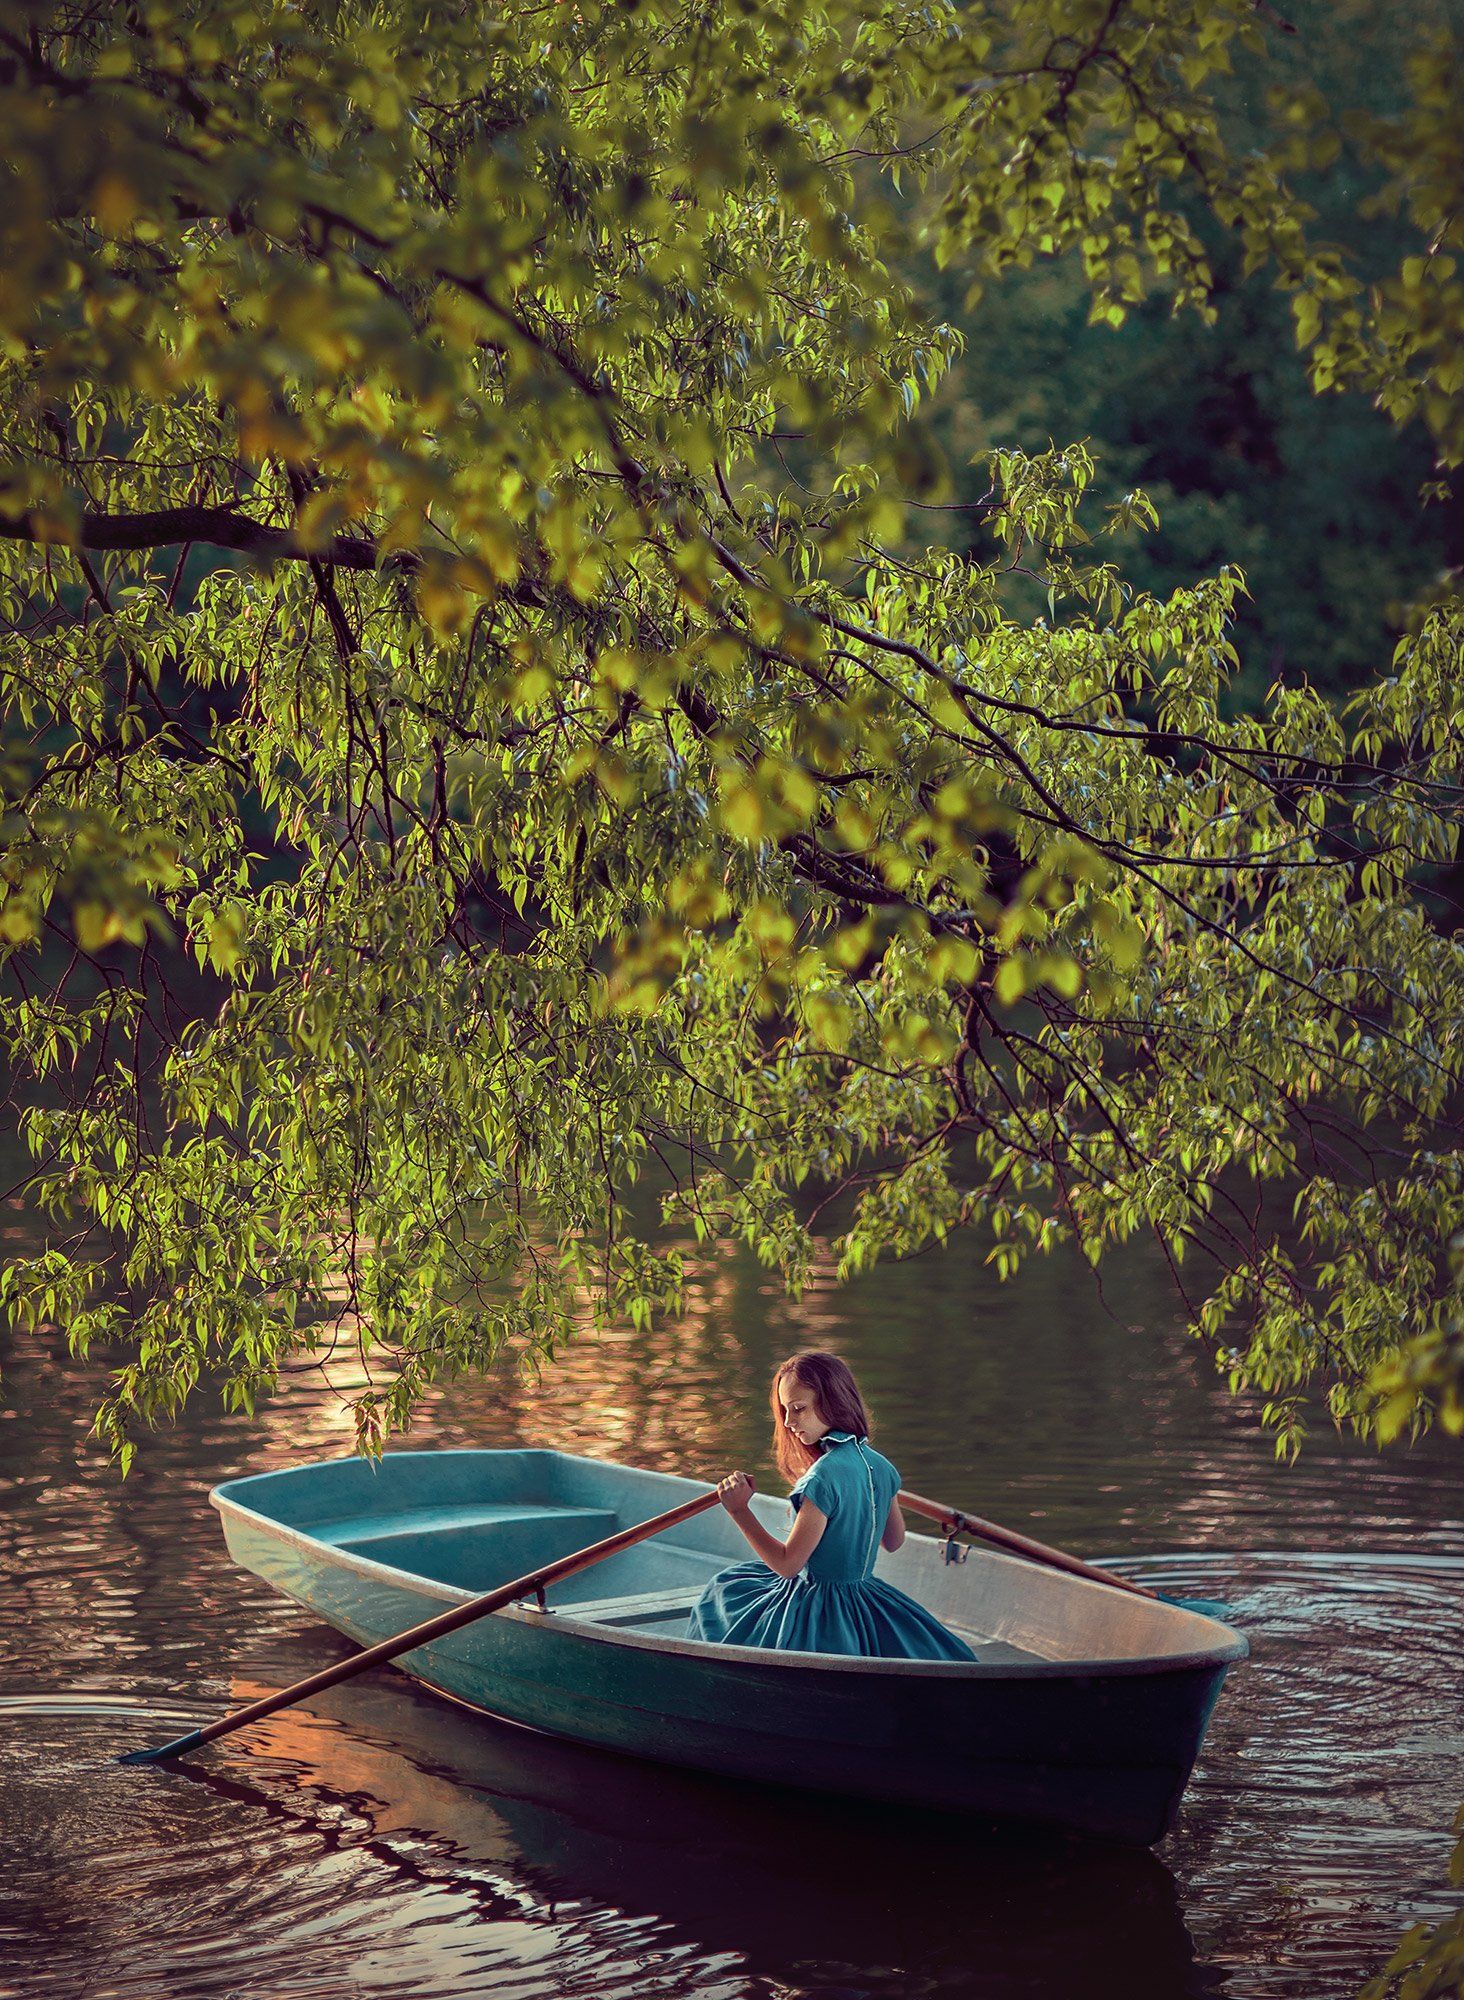 девушка, лодка, на воде, фотосессия в лодке, листья, дерево, озеро, Катрин Белоцерковская